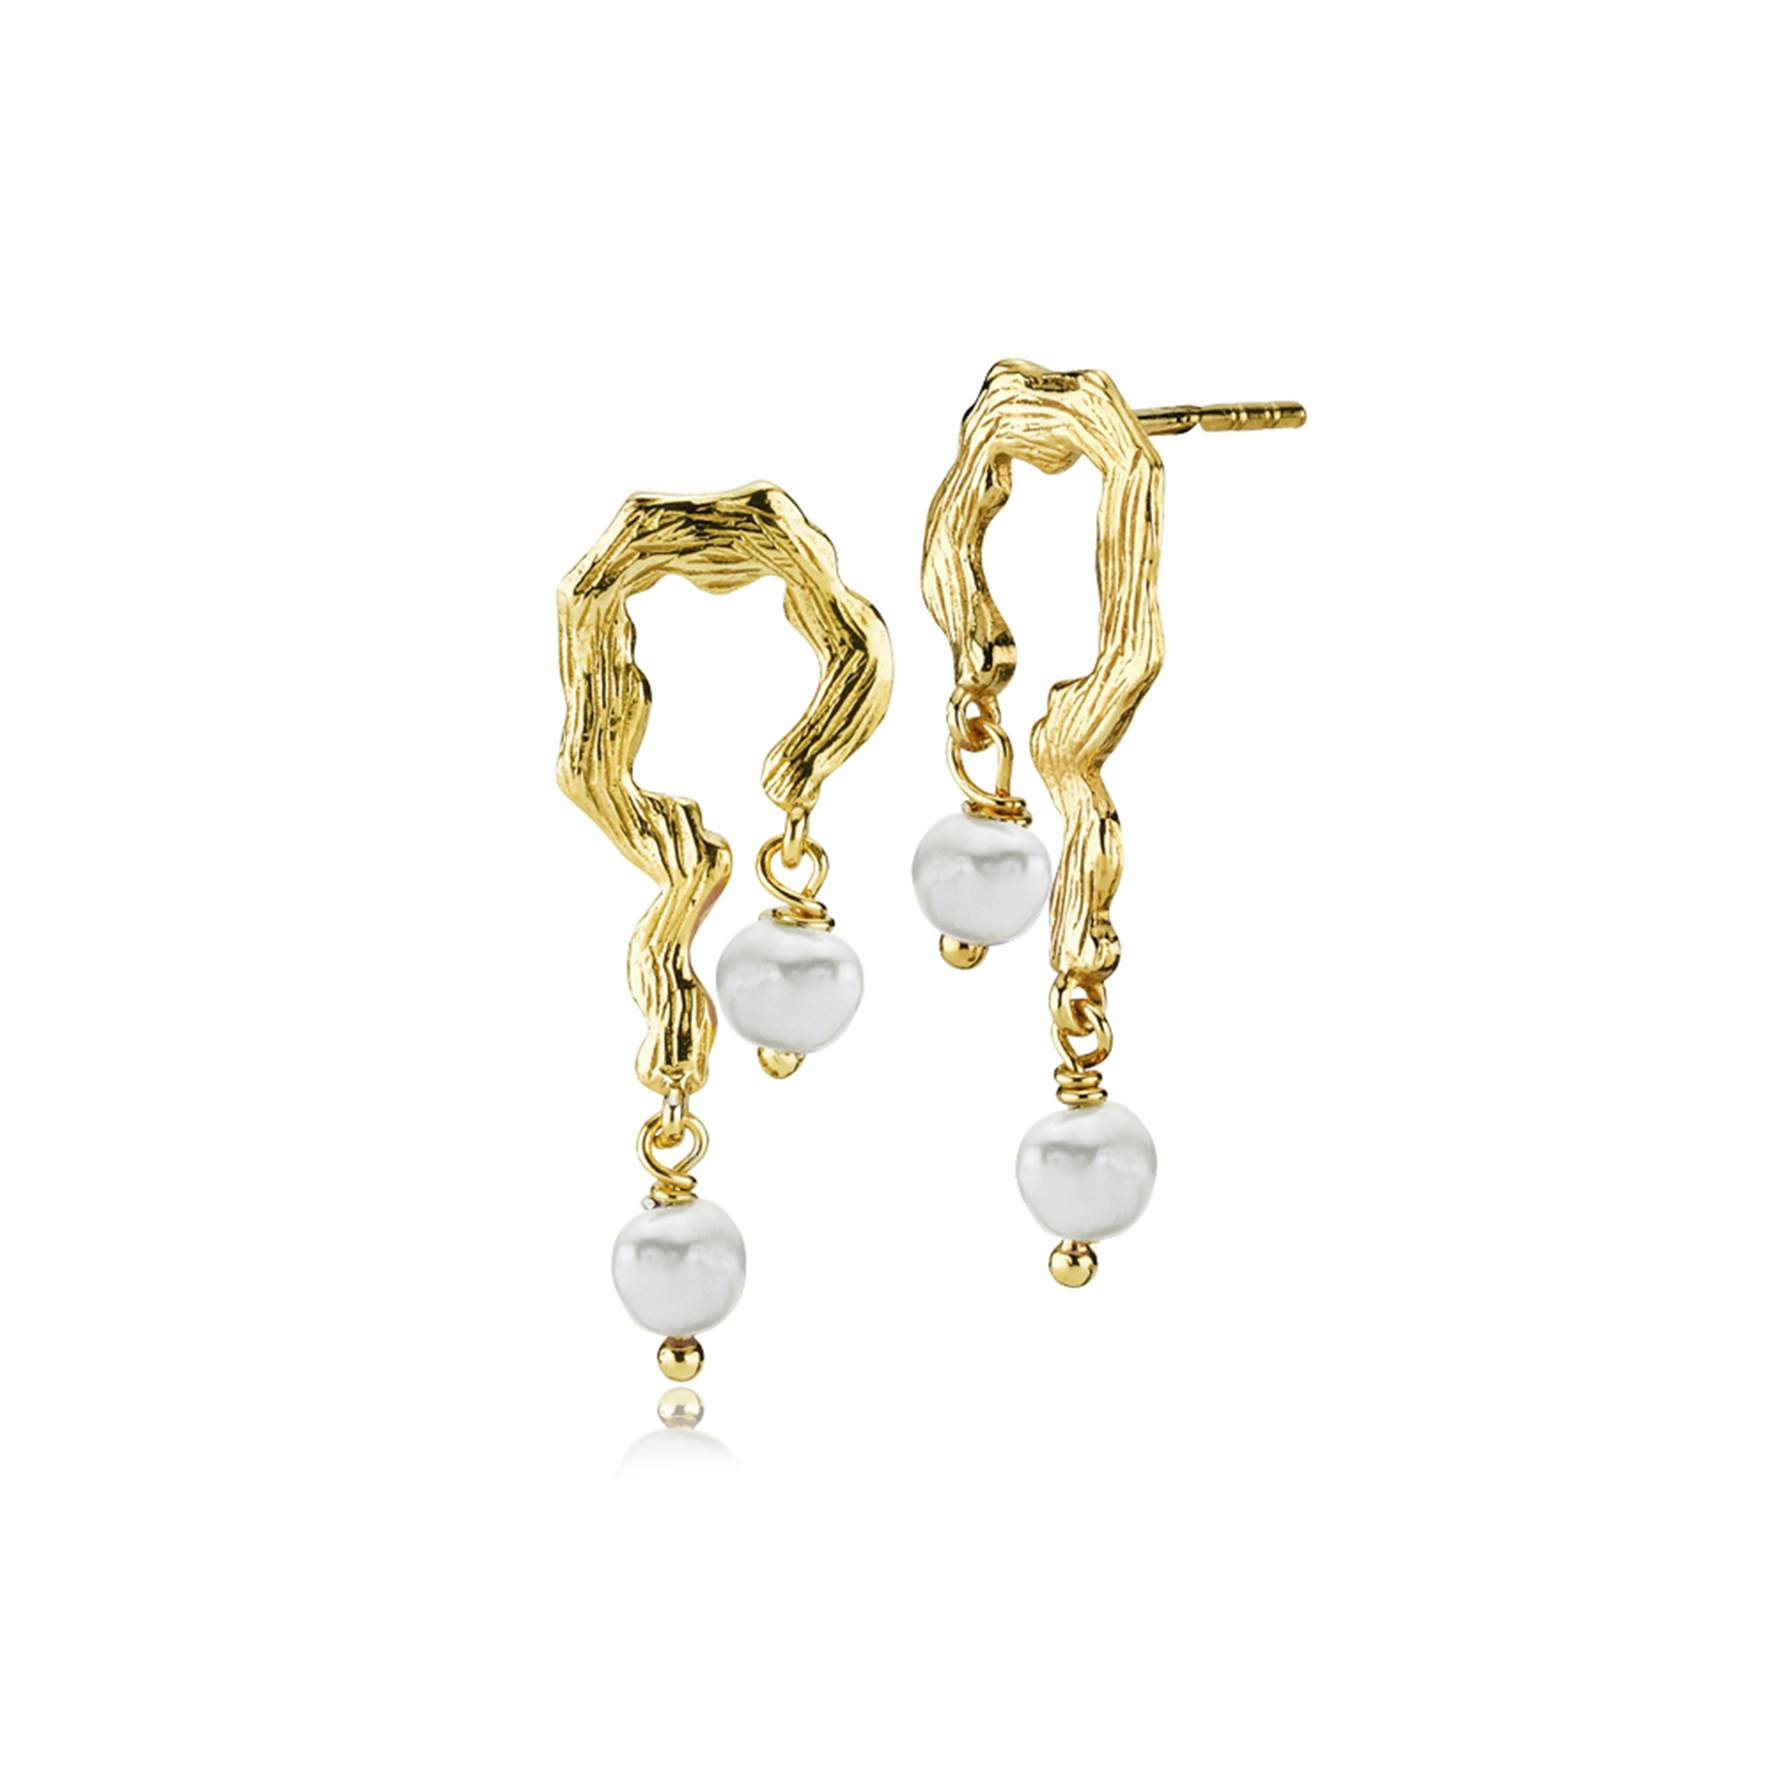 Lærke Bentsen By Sistie Earrings With Pearls fra Sistie i Forgylt-Sølv Sterling 925